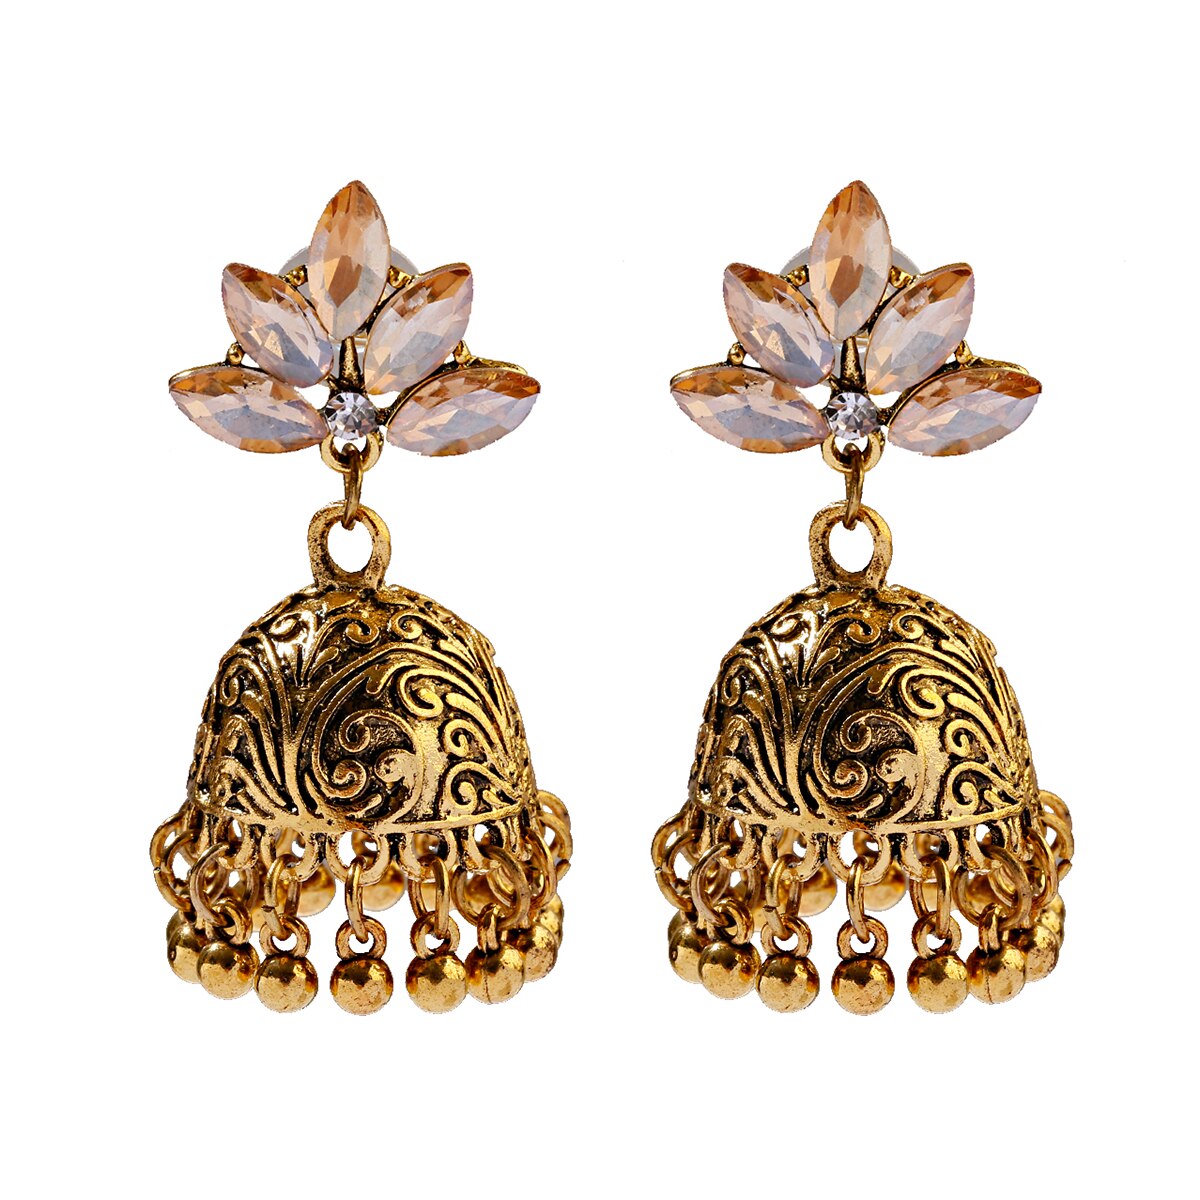 Luxury-Indian-Jhumka-Earrings-For-Women-Retro-Flower-Carved-CZ-Big-Bells-Tibetan-Earrings-Oorbellen-1005004770824397-6